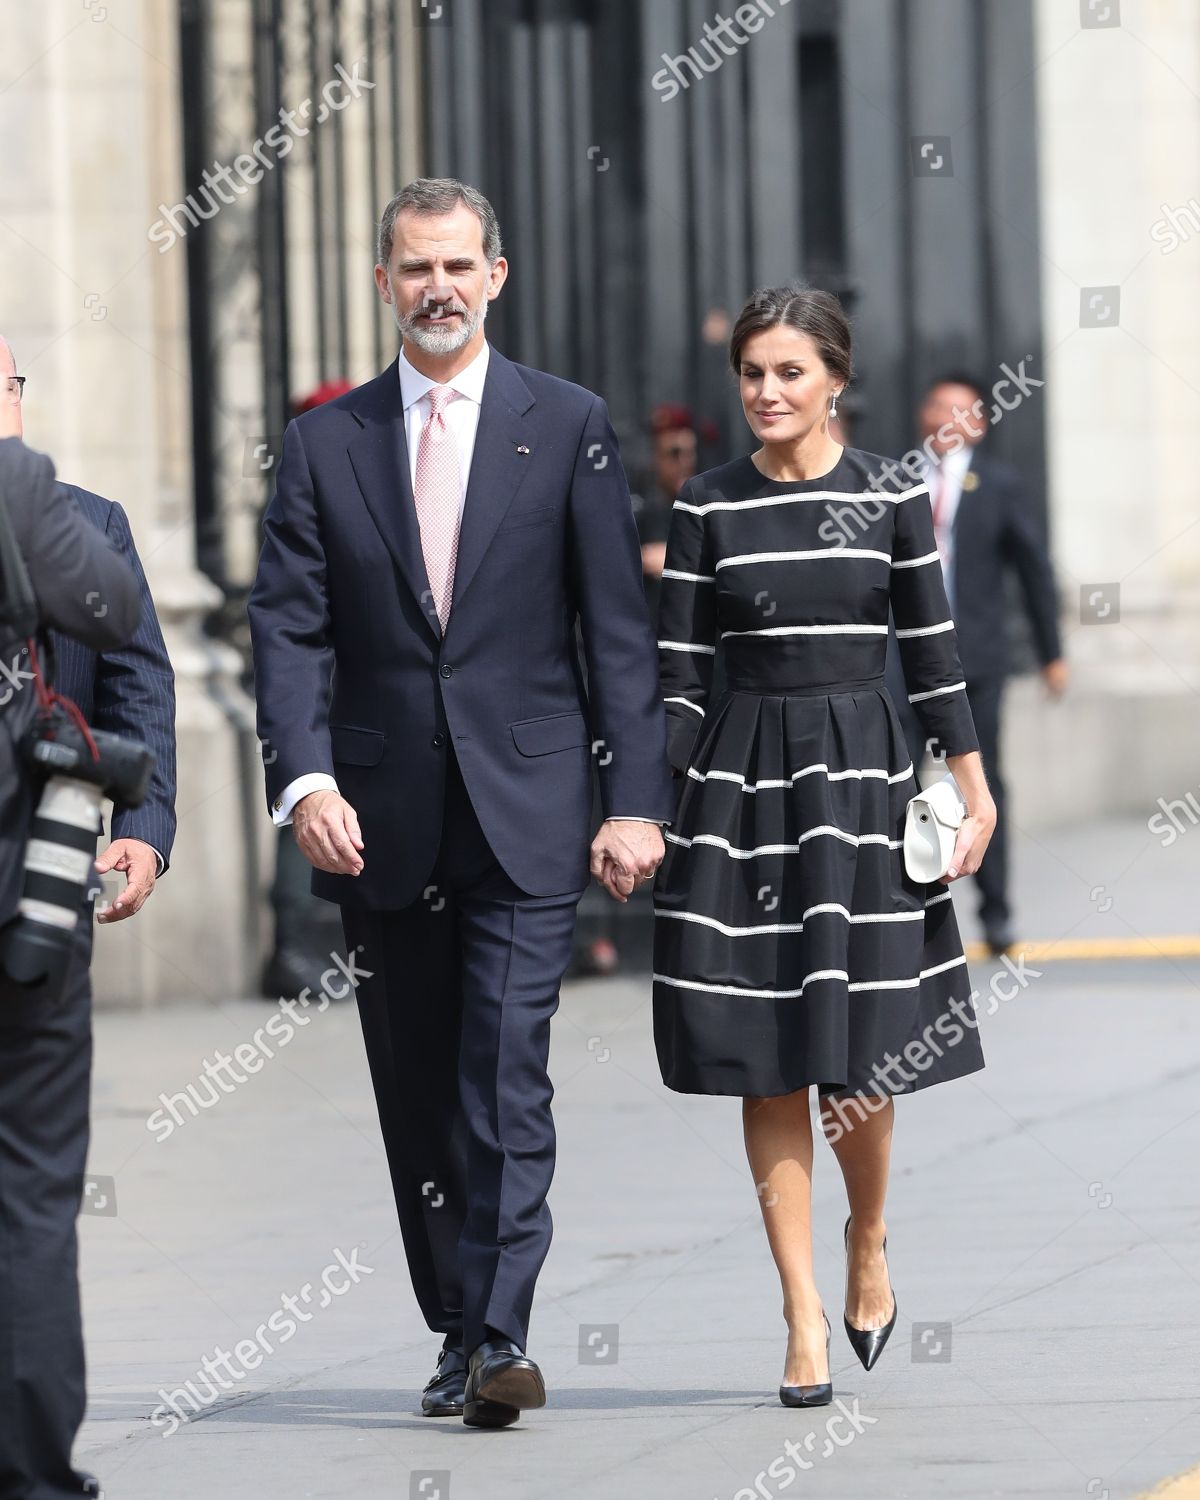 spanish-royals-visit-to-lima-peru-shutterstock-editorial-9977226o.jpg